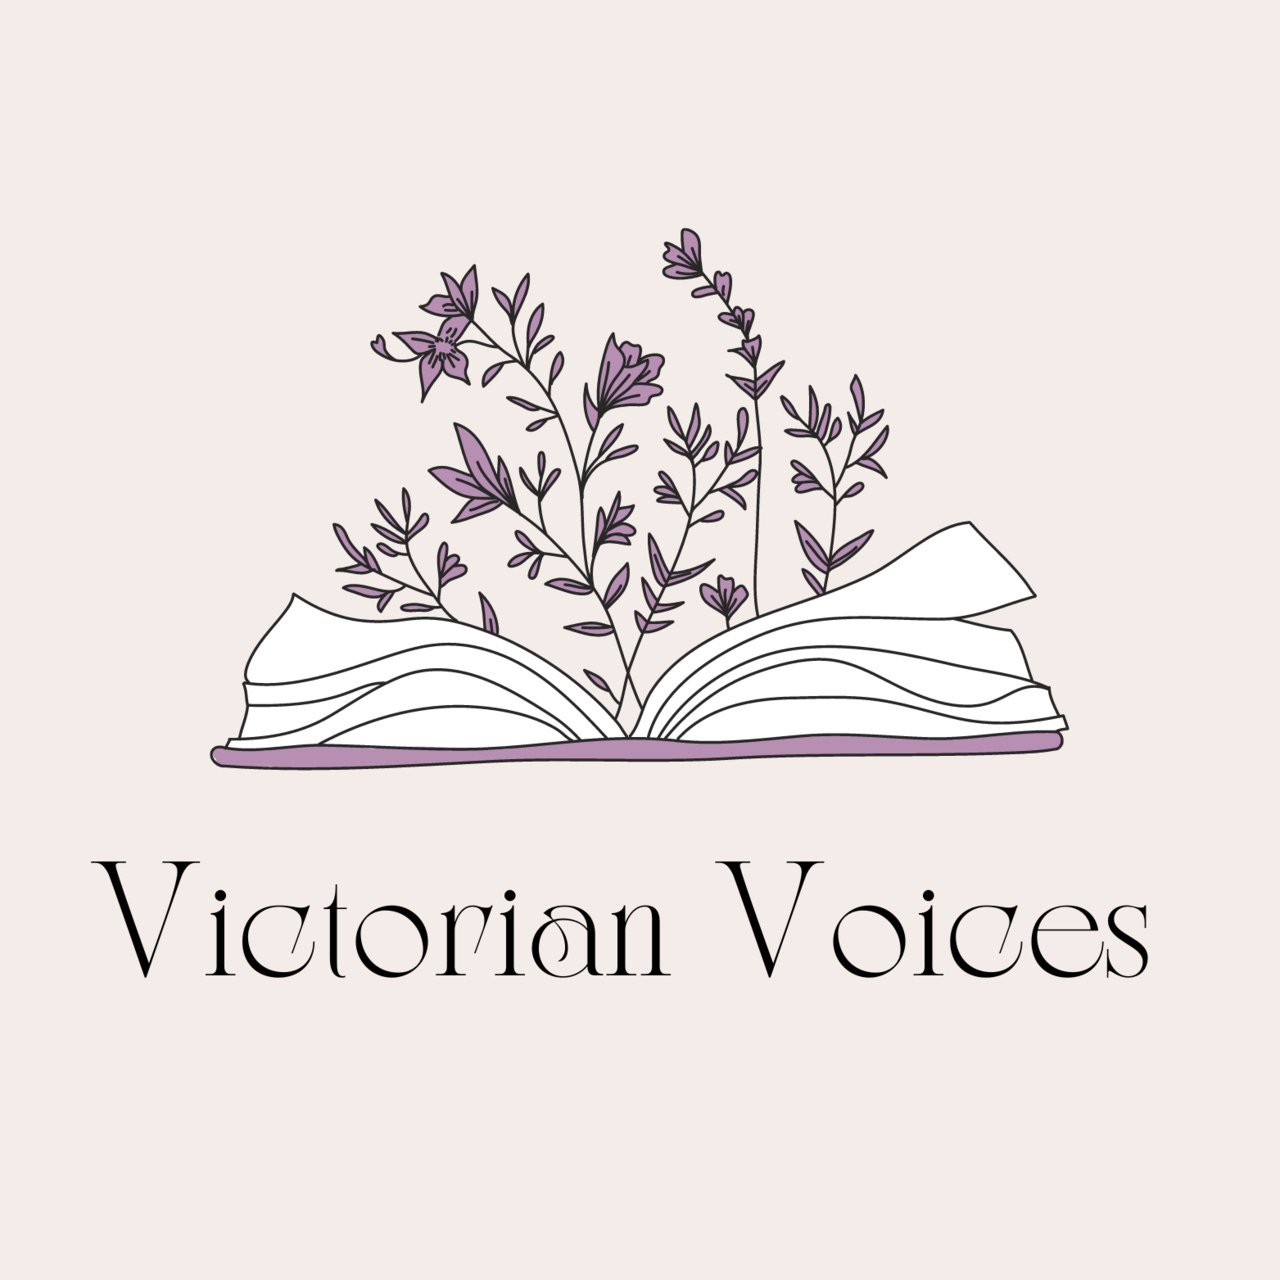 Victorian Voices